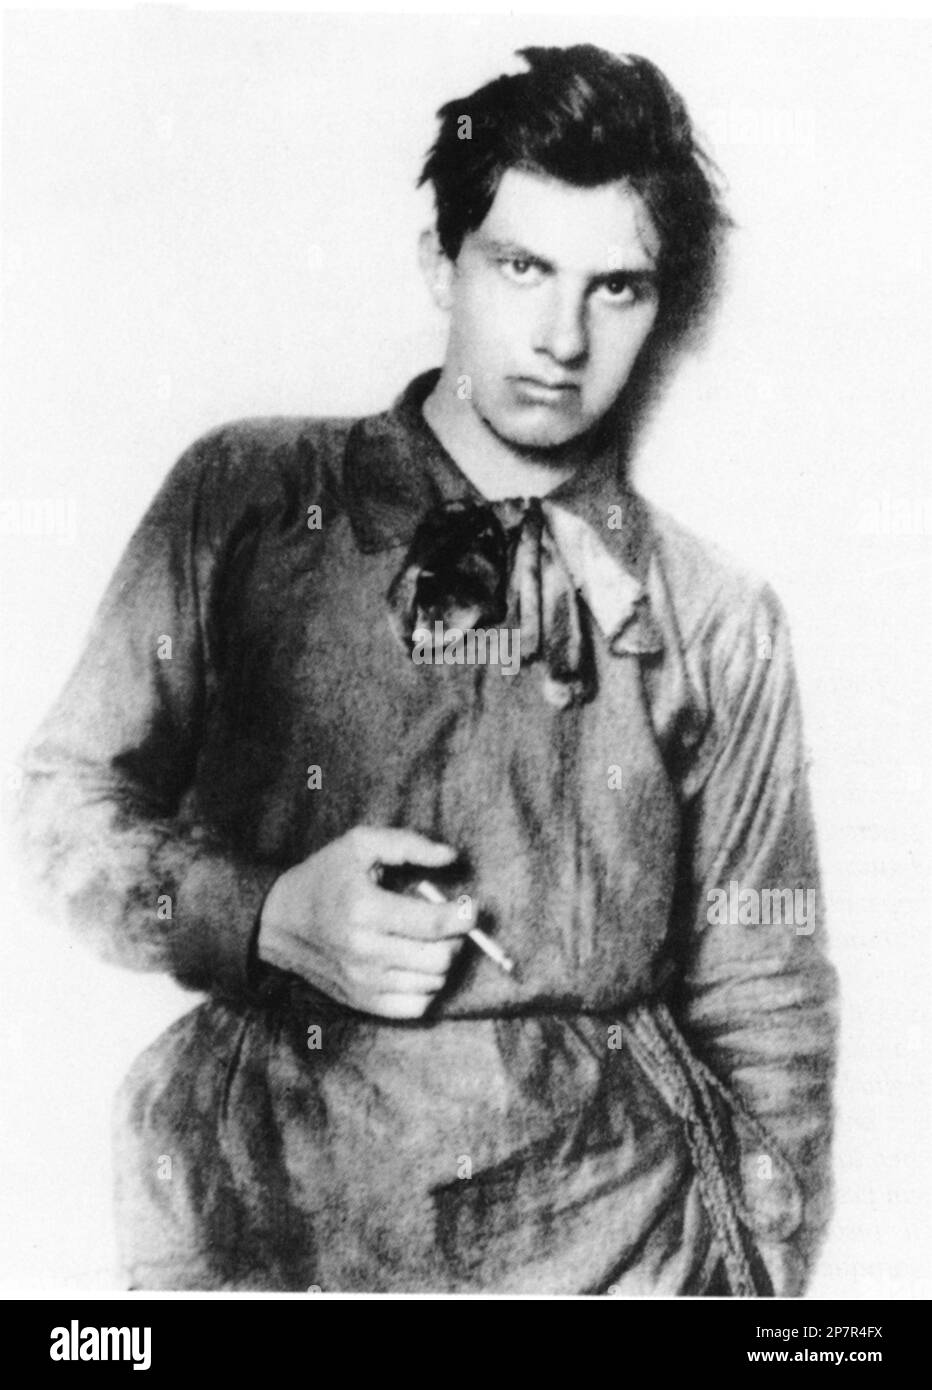 The Avantgarde russian poet , dramatist , actor and  writer VLADIMIR MAJAKOVSKIJ ( 1893 - 1930 ).  - LETTERATO - SCRITTORE - LETTERATURA - SCRITTRICE -  Literature - PORTRAIT - RITRATTO  - POET - POETA - POESIA - POETRY - ATTORE - TEATRO - THEATRE - CINEMA - AVANGUARDIA  - FUTURISM - FUTURISTA - FUTURIST - FUTURISMO - Maiakowski - maudit - bohemien - poeta maledetto  ----  Archivio GBB Stock Photo